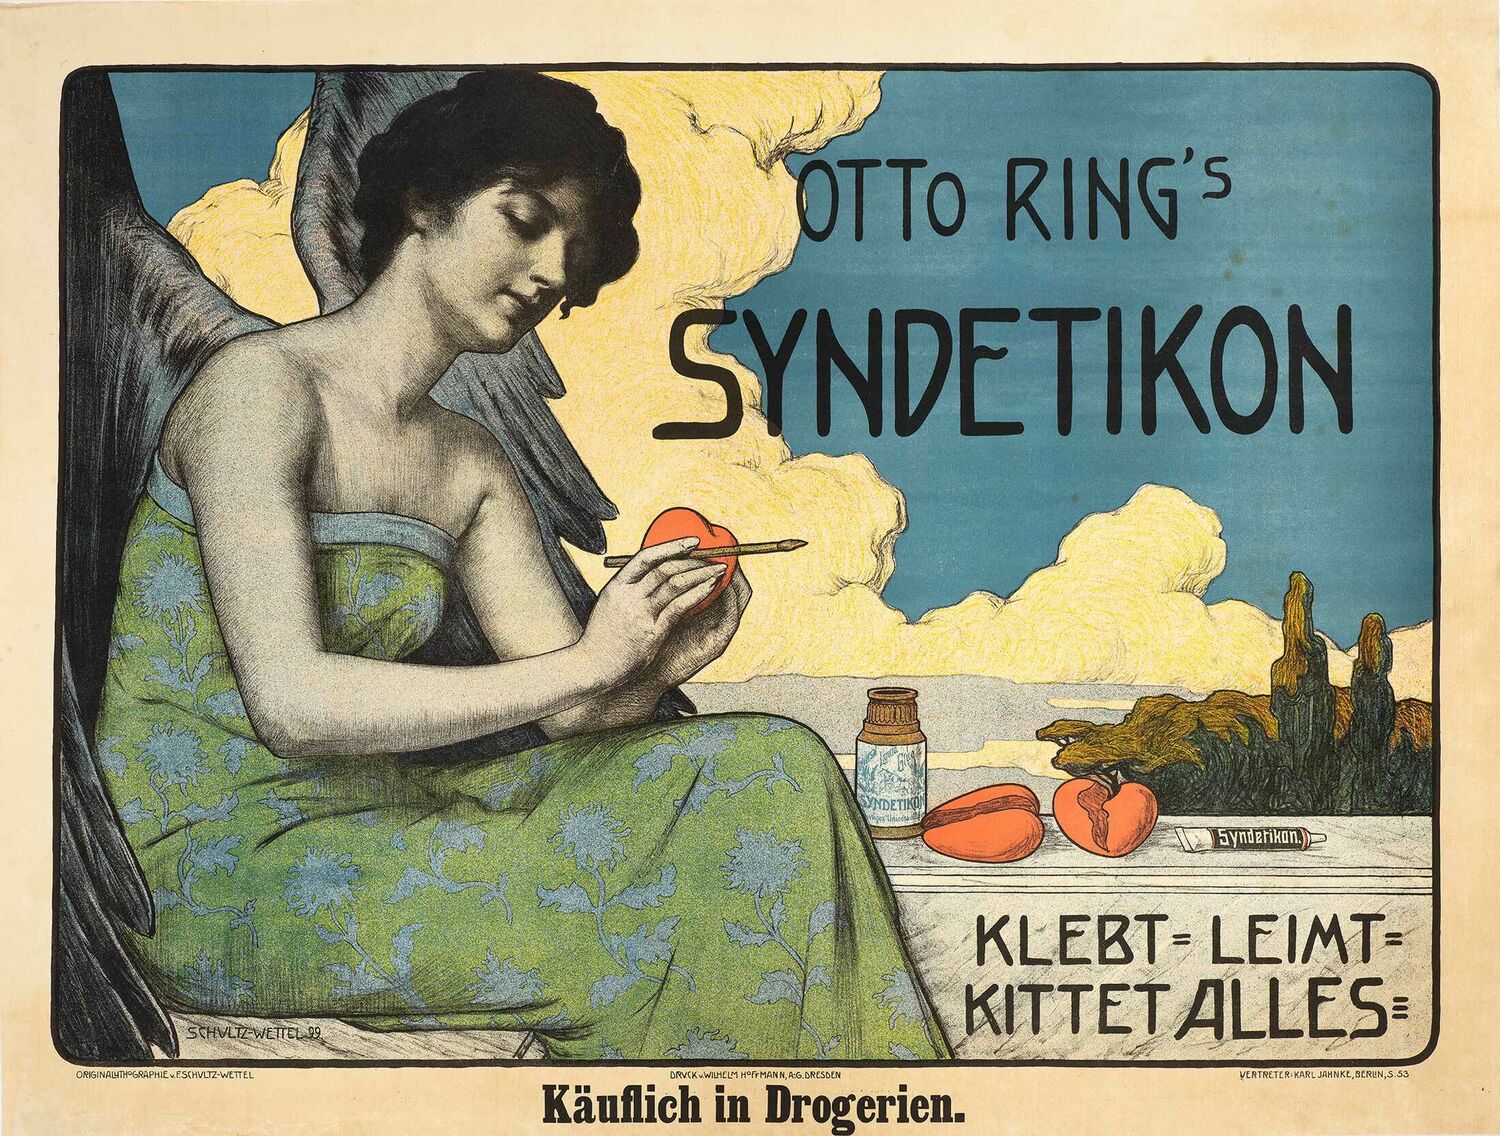 Otto Ring's Syndetikon